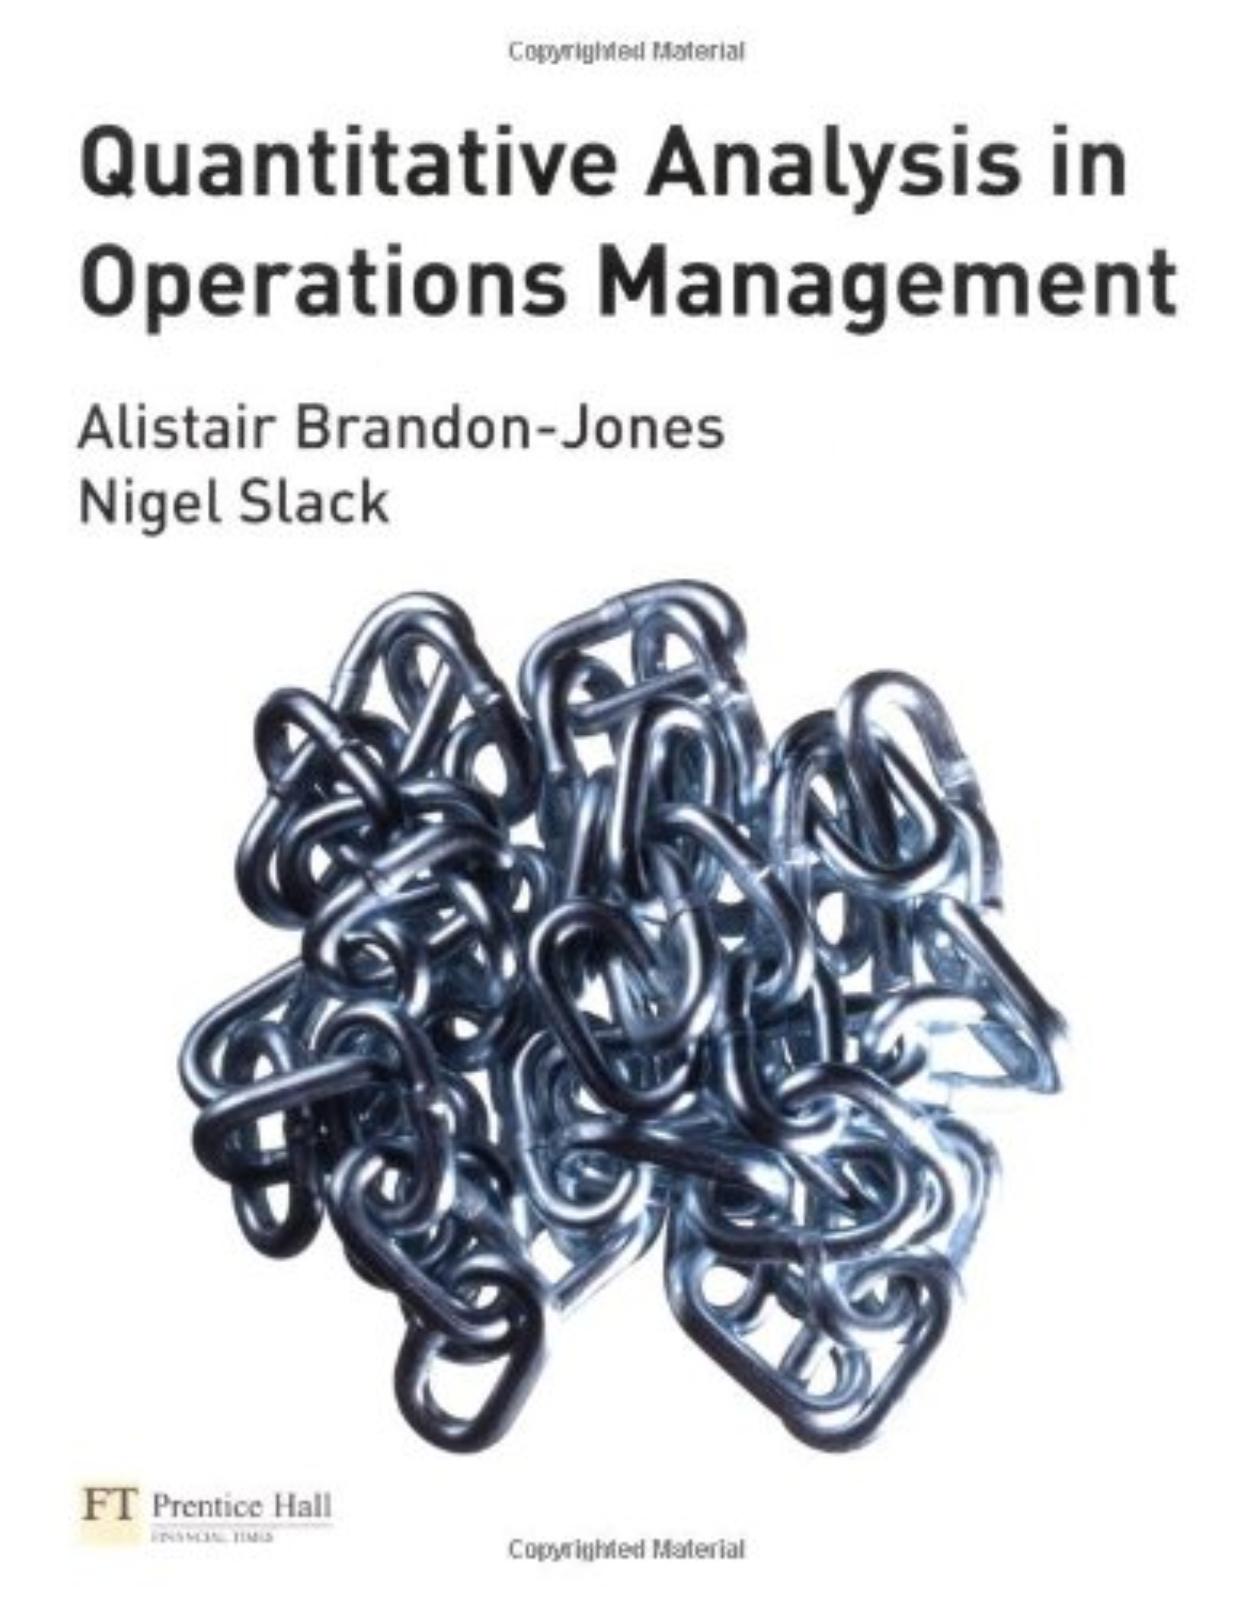 Qantitative Analysis in Operations Management